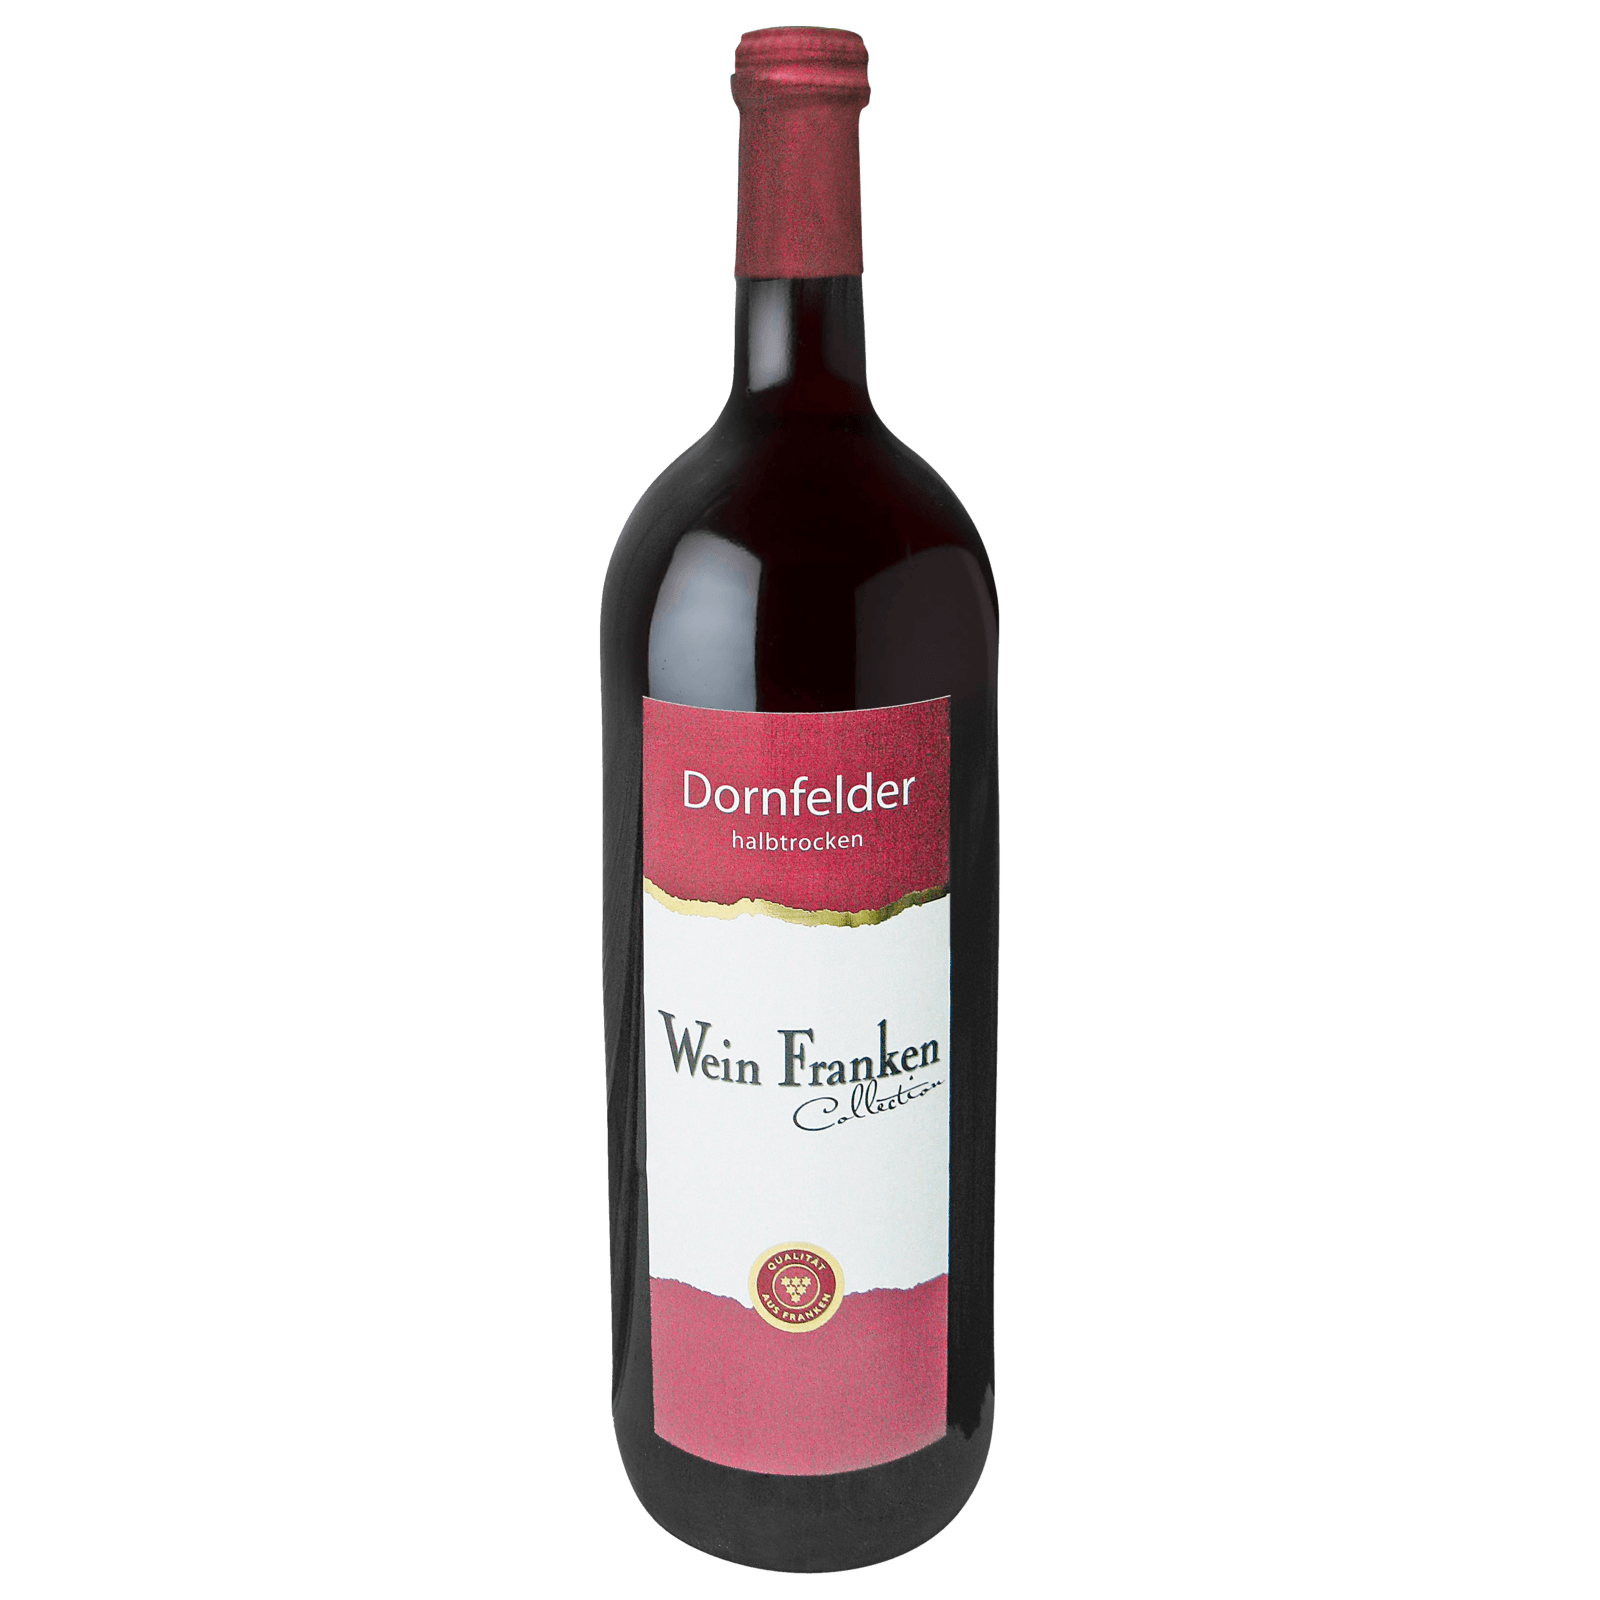 Wein Franken Rotwein 1l REWE bestellen! halbtrocken online bei QbA Dornfelder